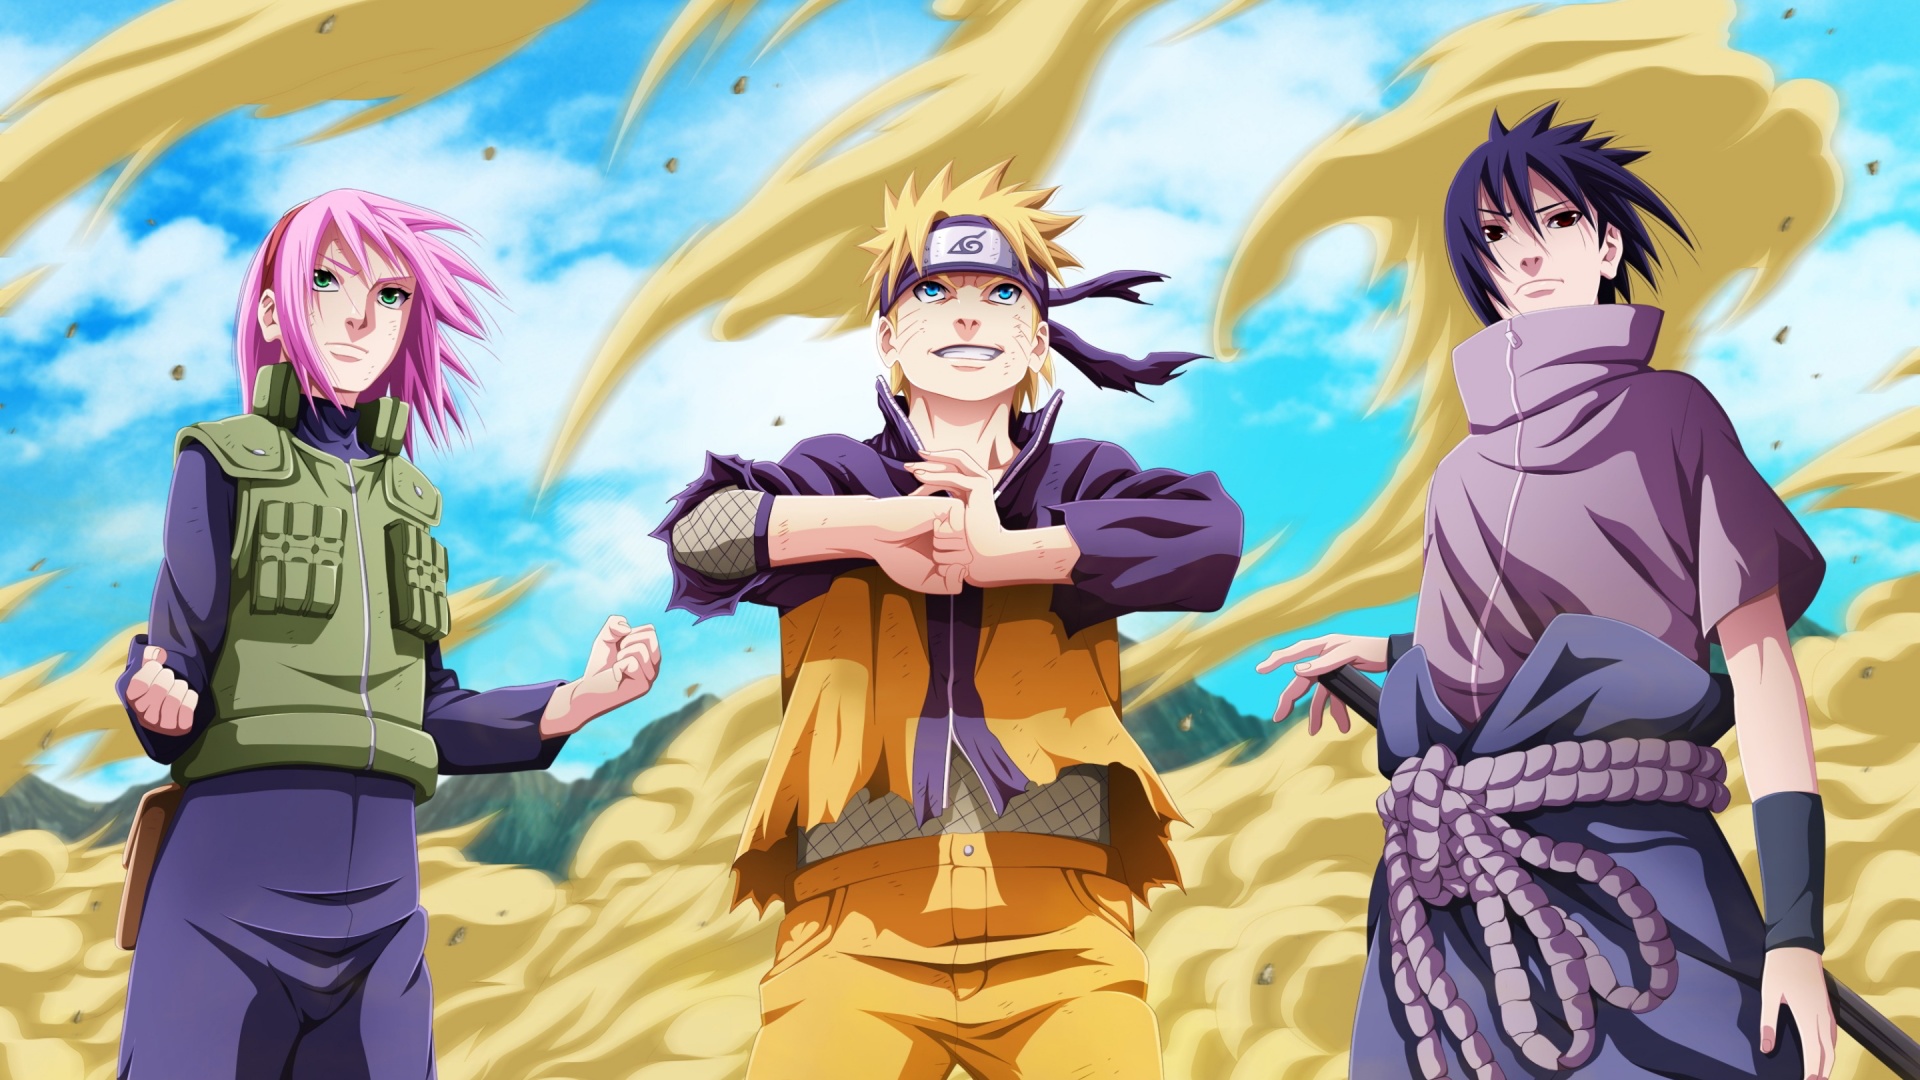 Naruto Backgrounds Free Download  PixelsTalkNet